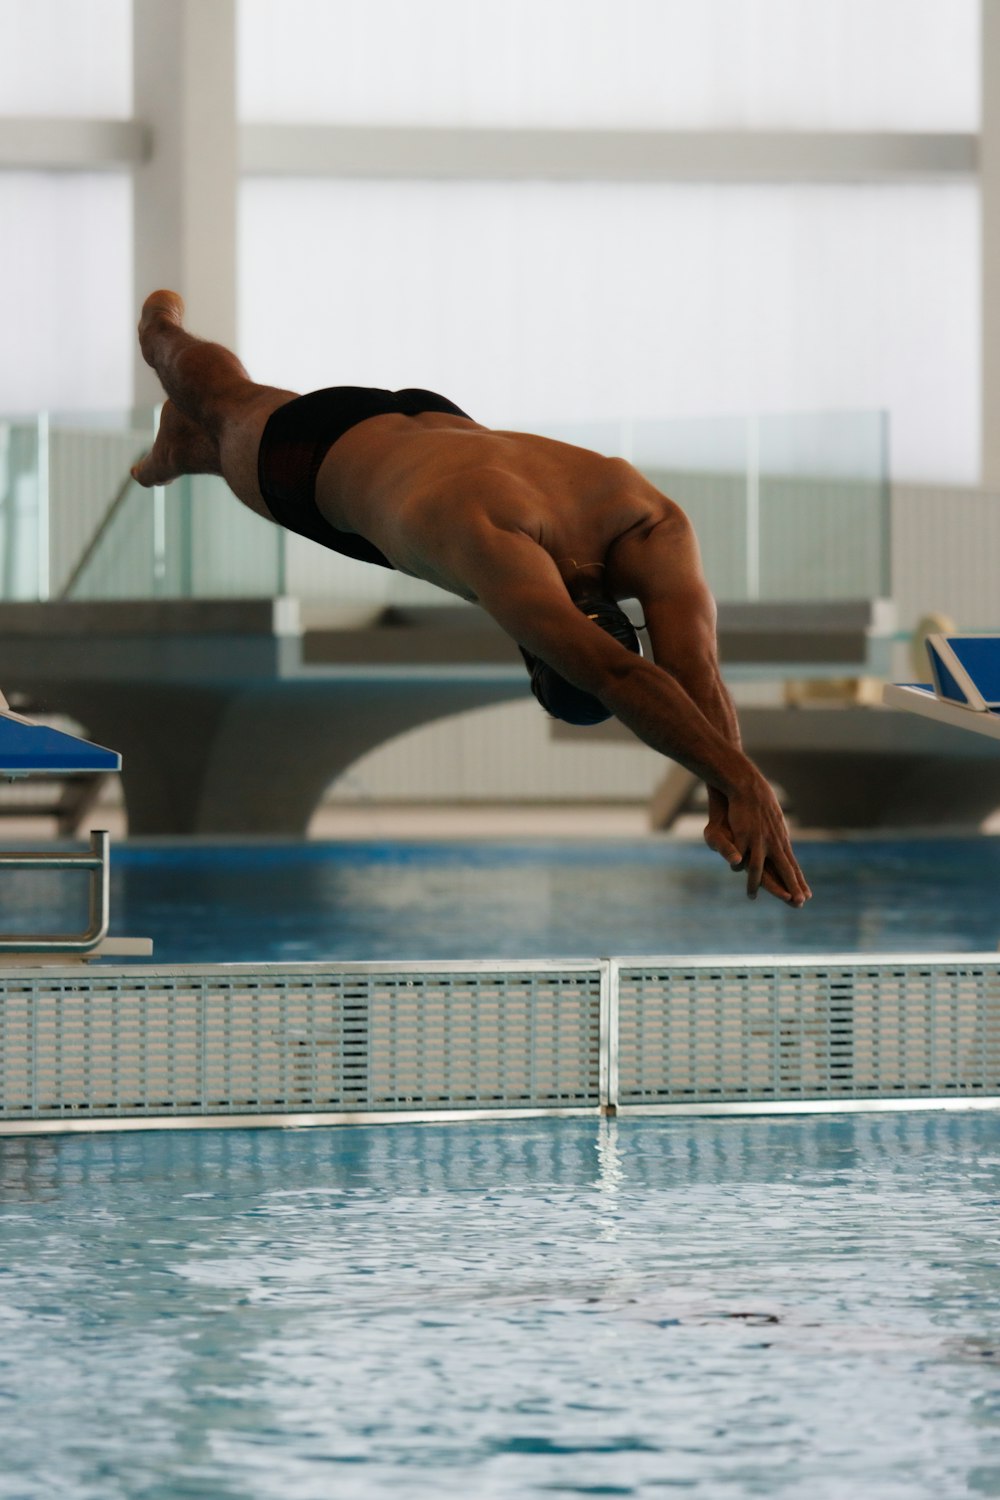 una persona saltando a una piscina